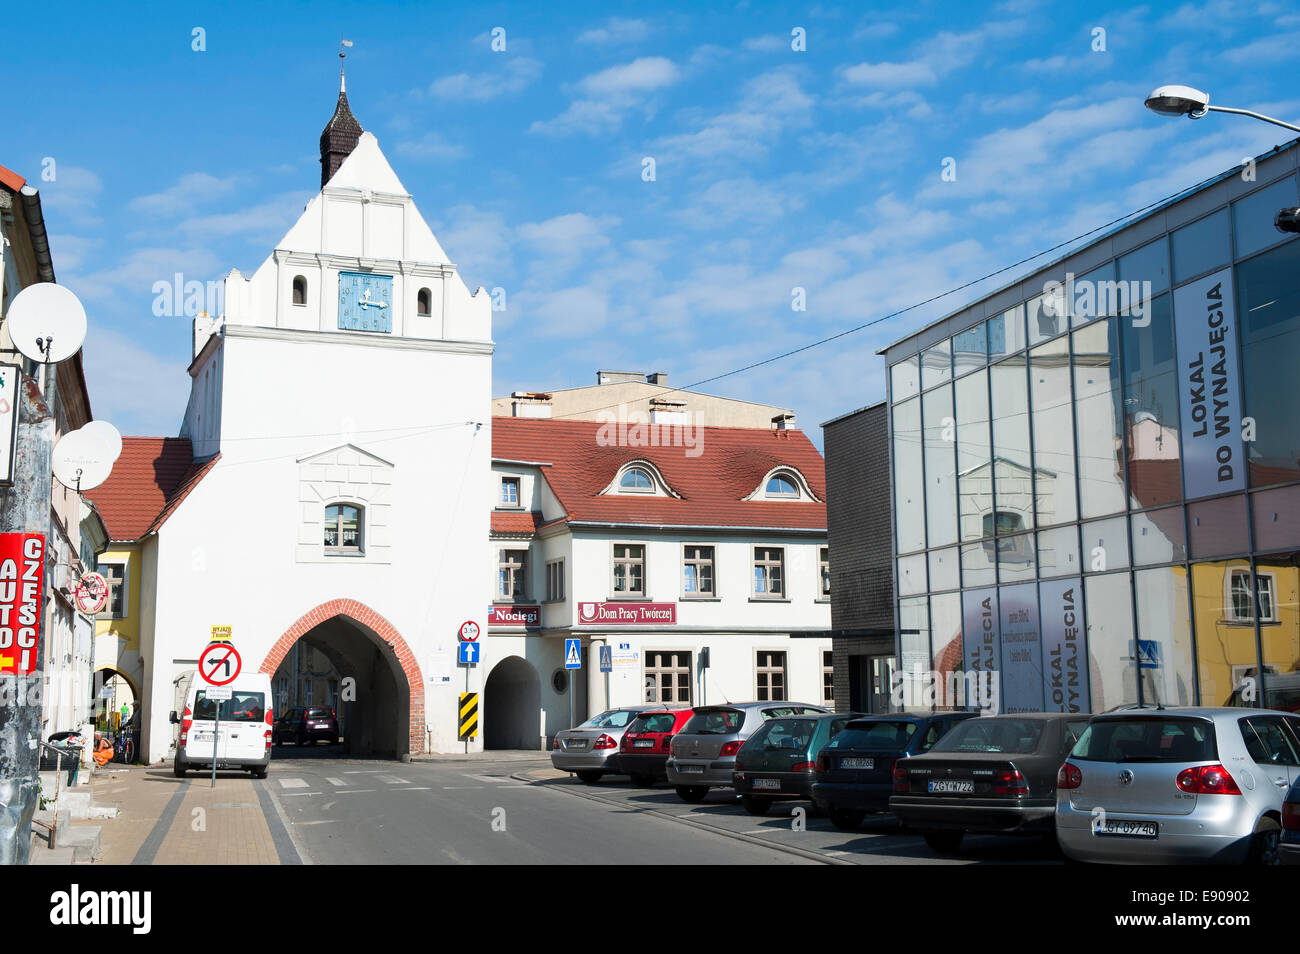 Kamienna Gate, Gryfice, West Pomeranian Voivodeship, Poland Stock Photo